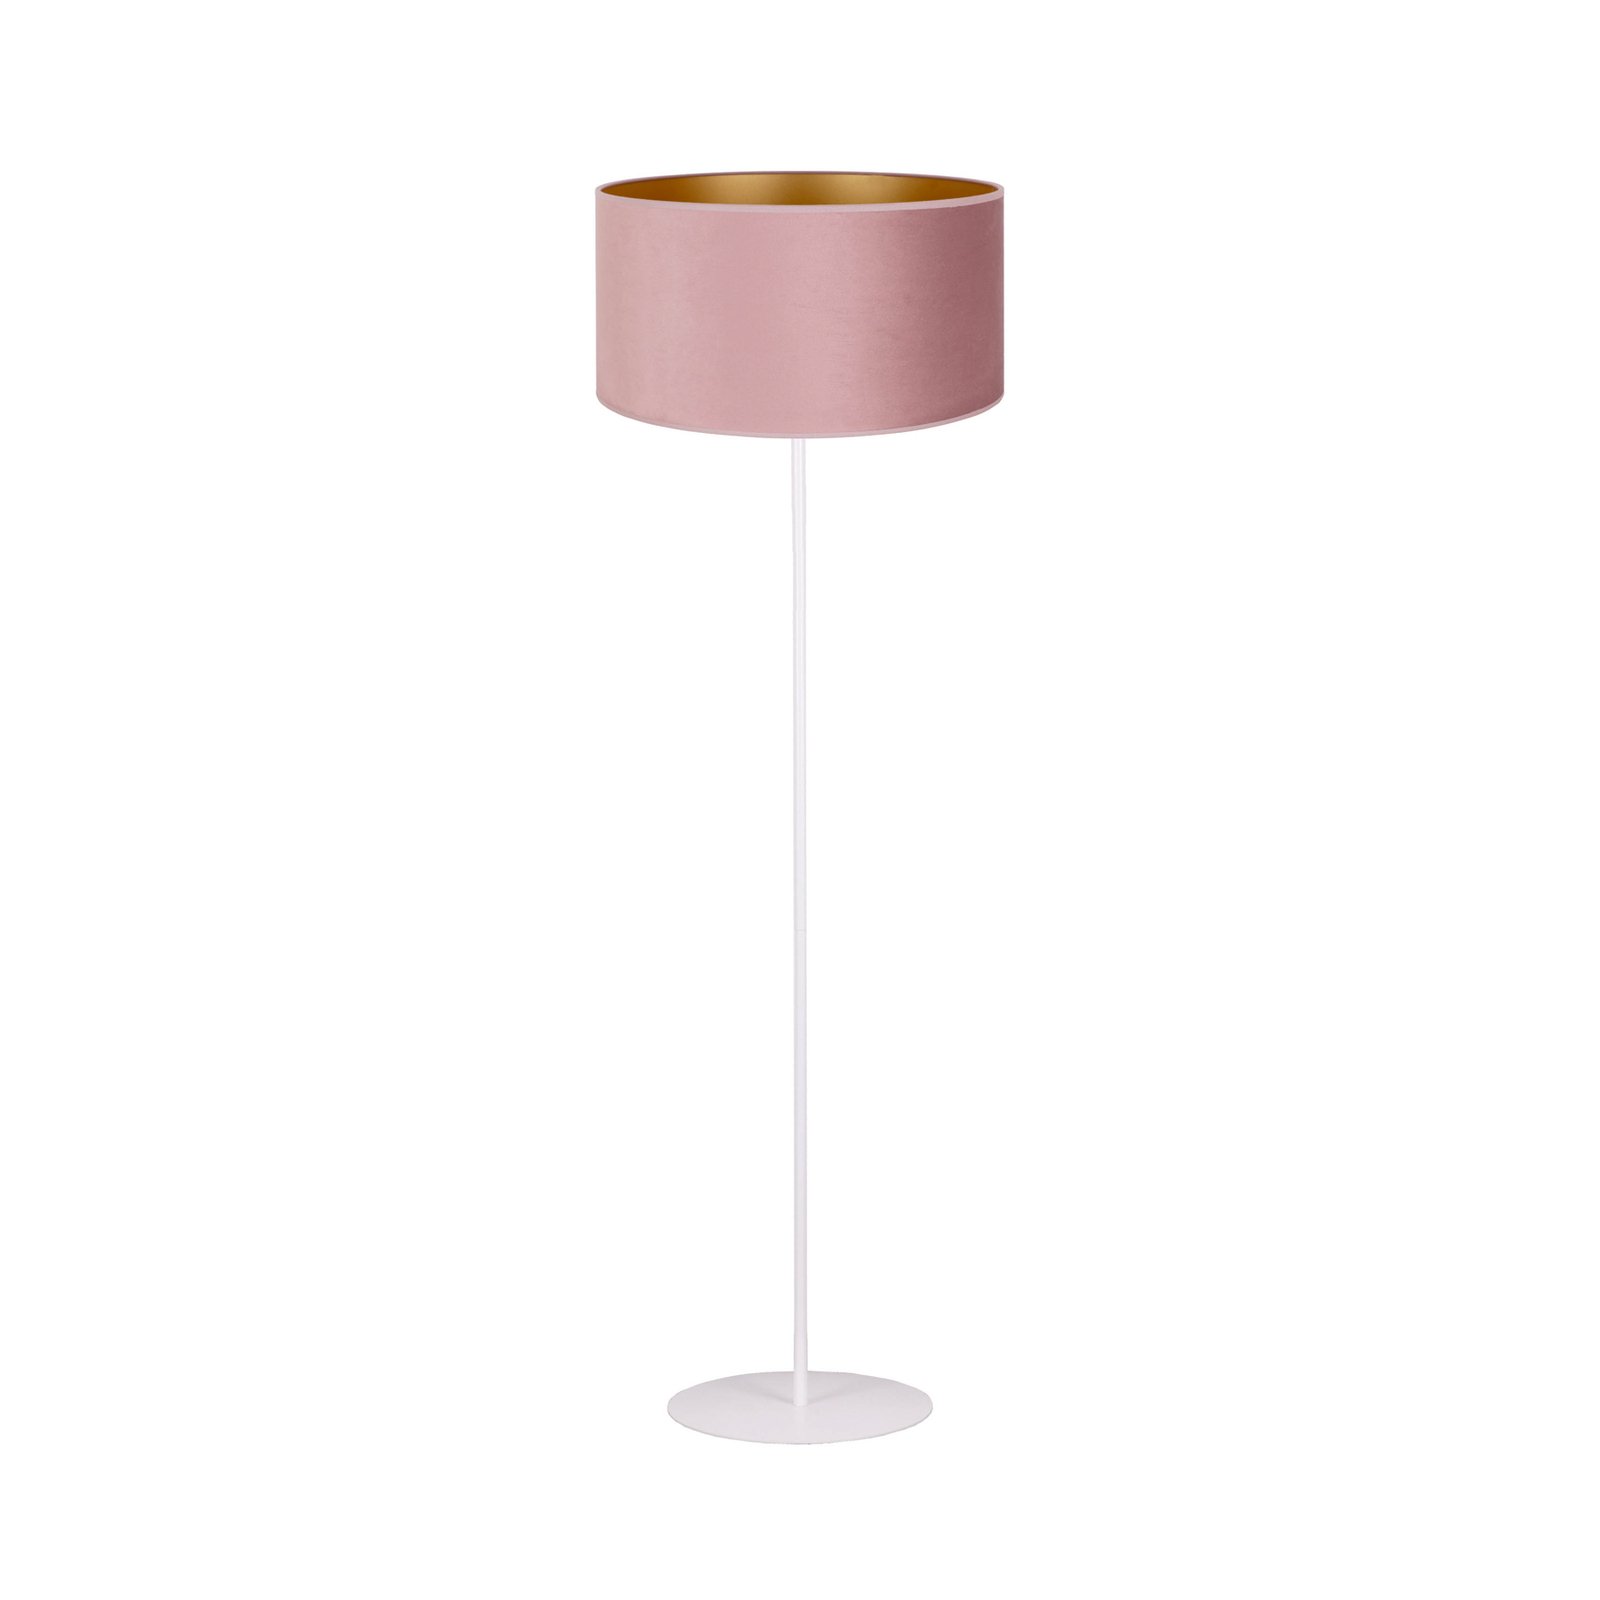 Golden Roller floor lamp light pink/gold